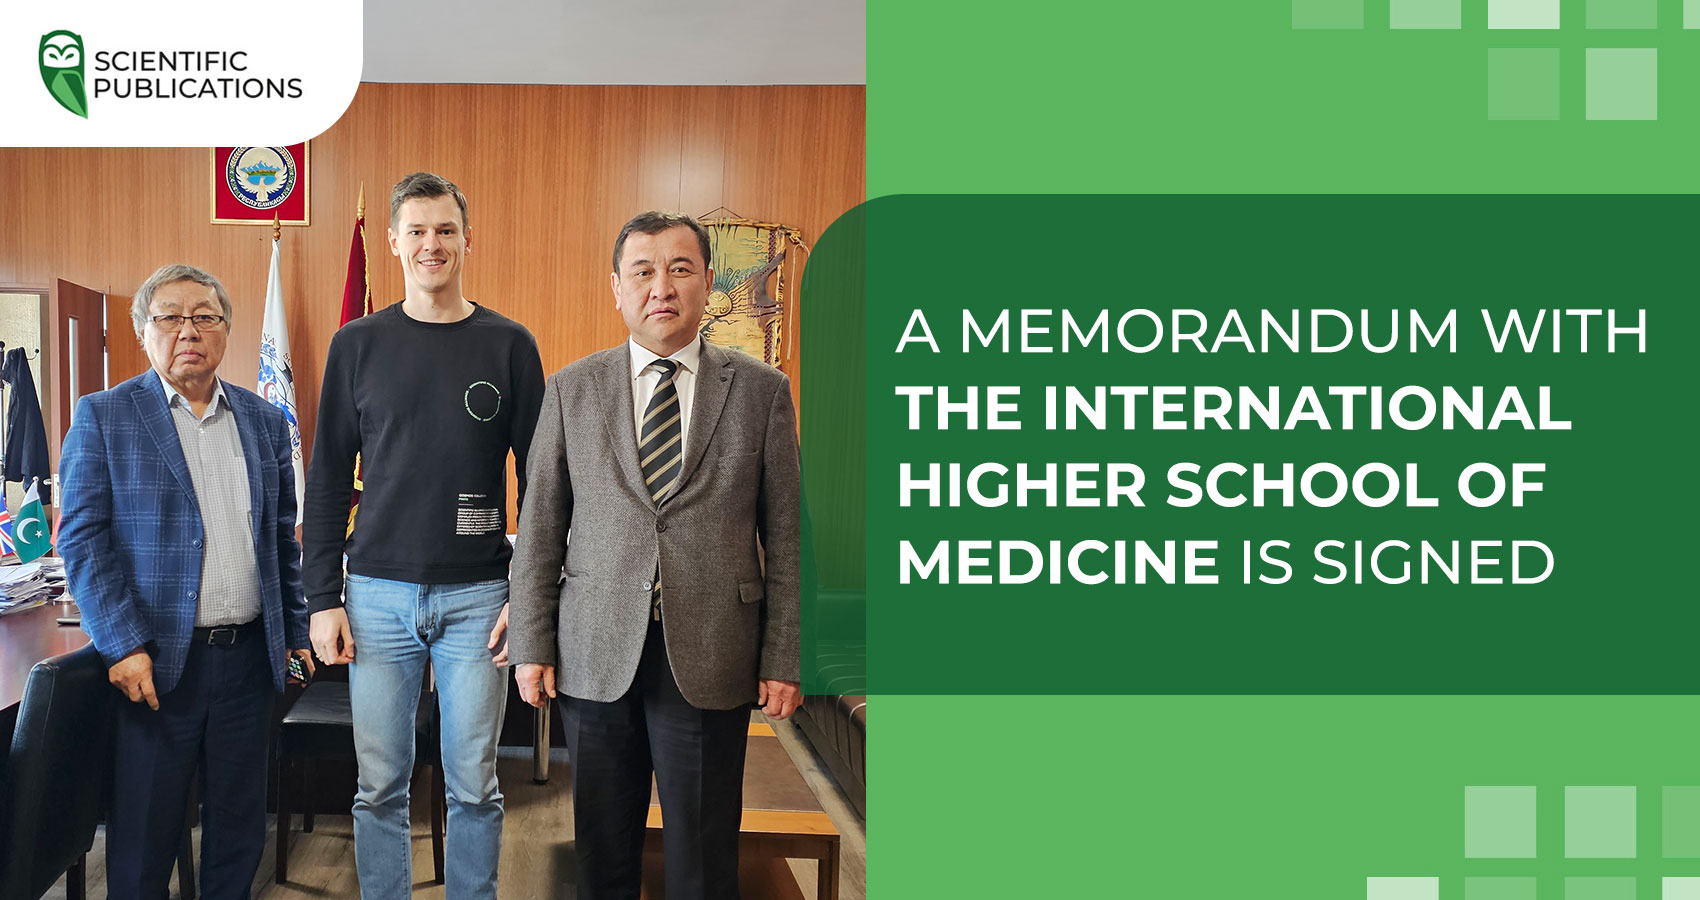 A memorandum has been signed with the International Higher School of Medicine